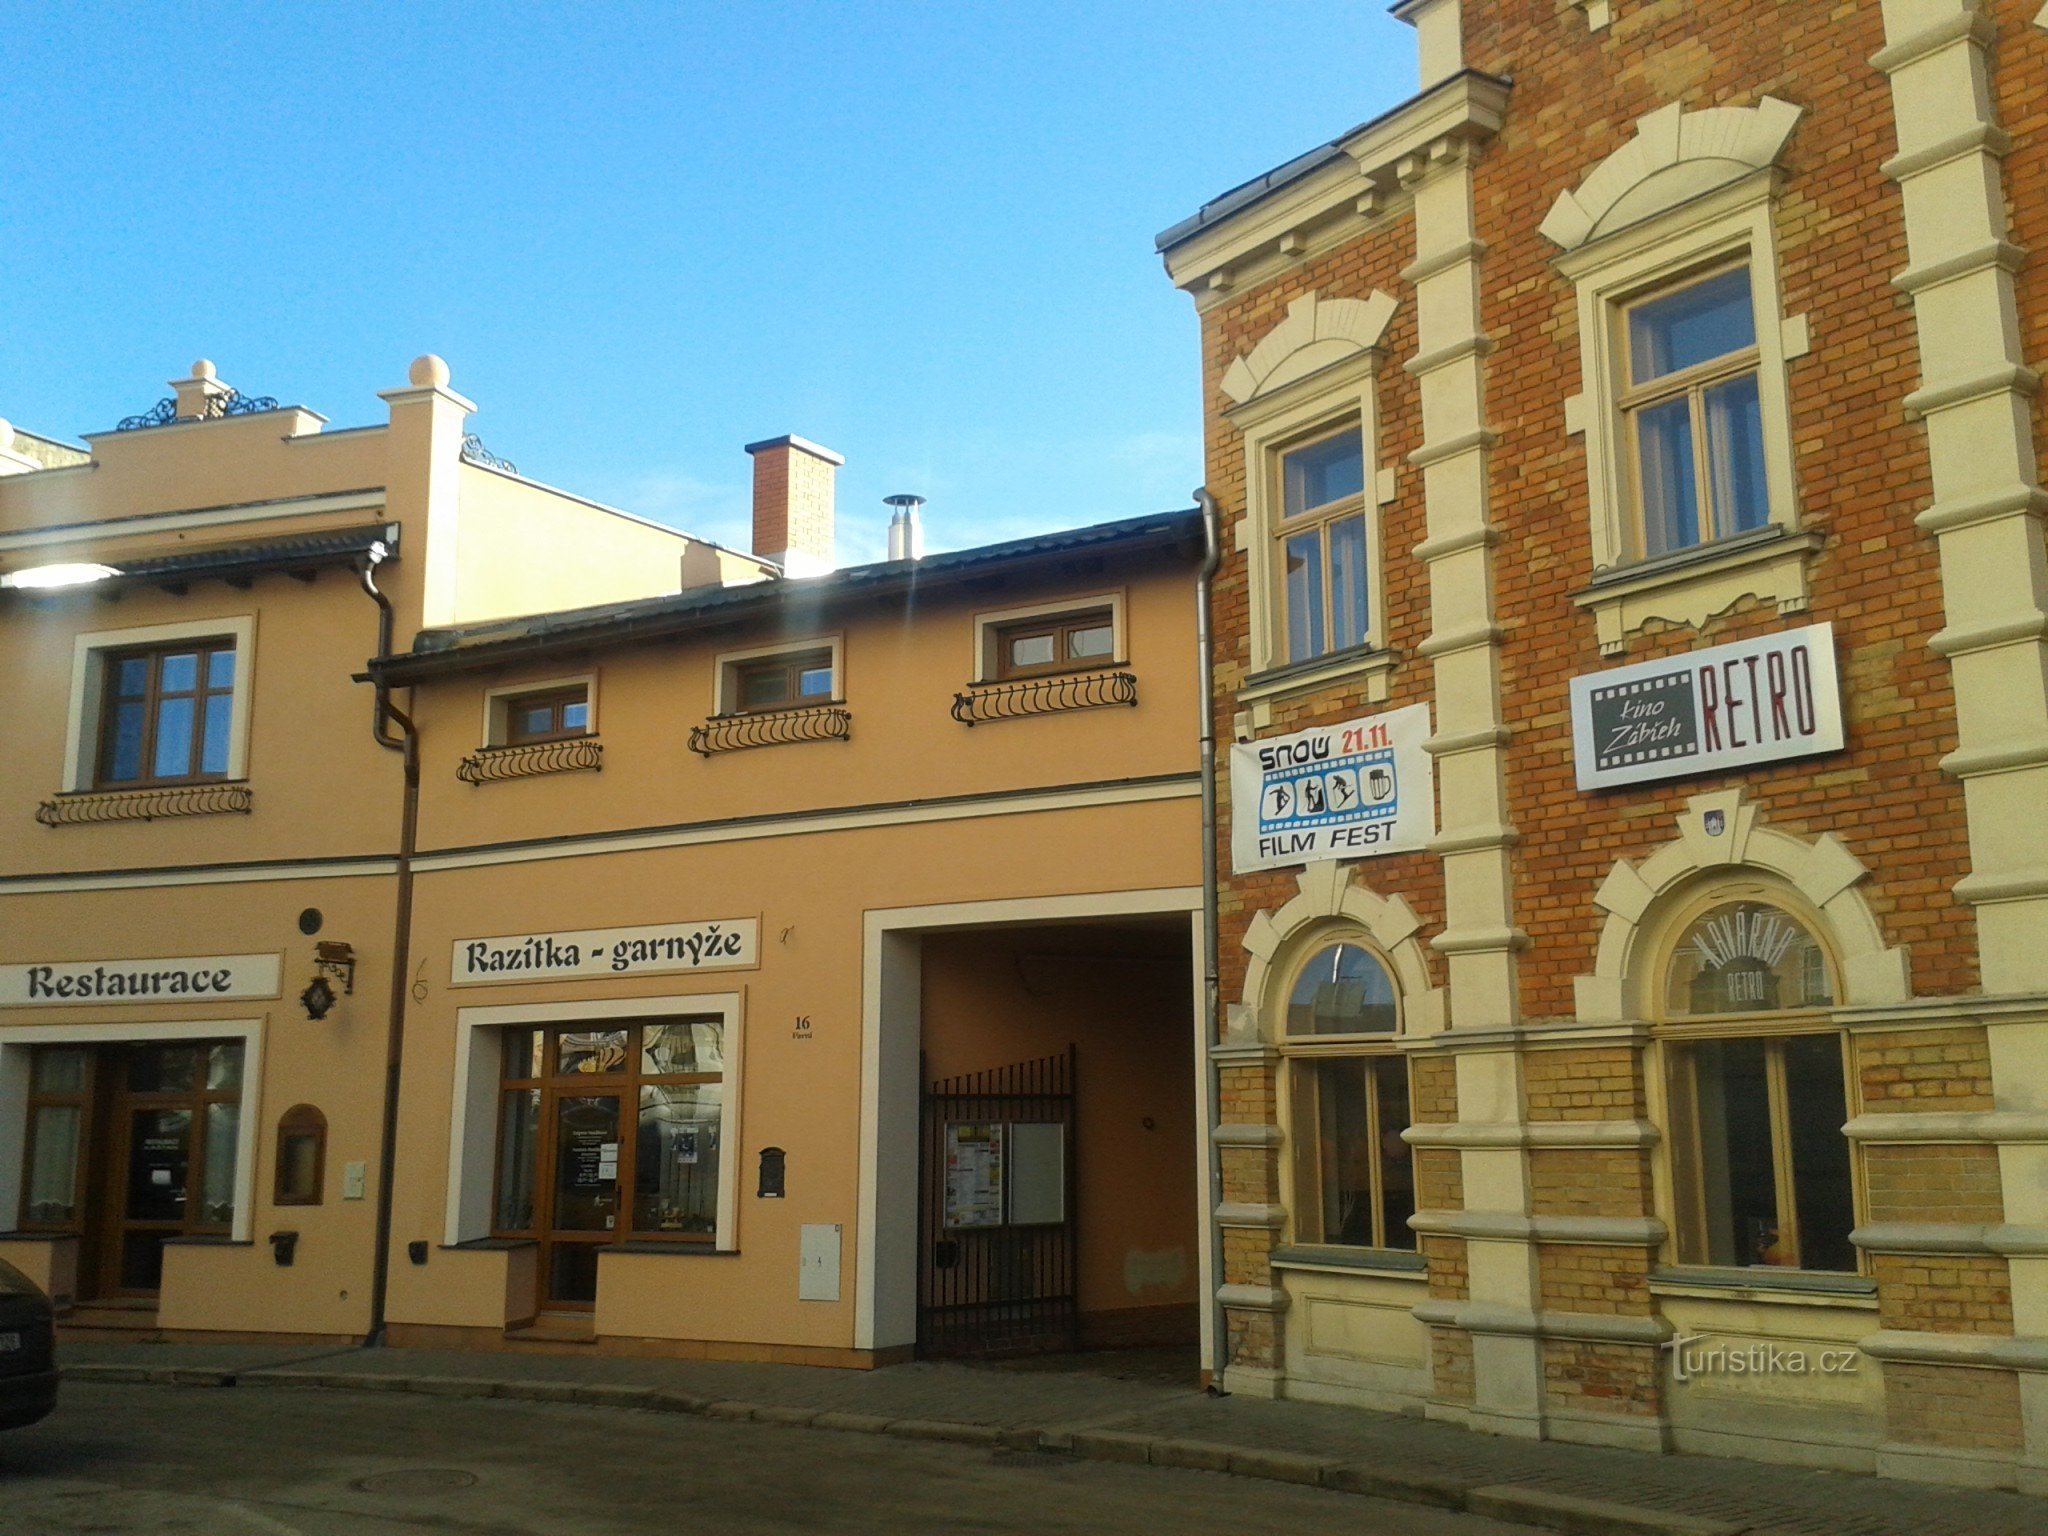 Zábřeh - Edificio de cine retro con cafetería